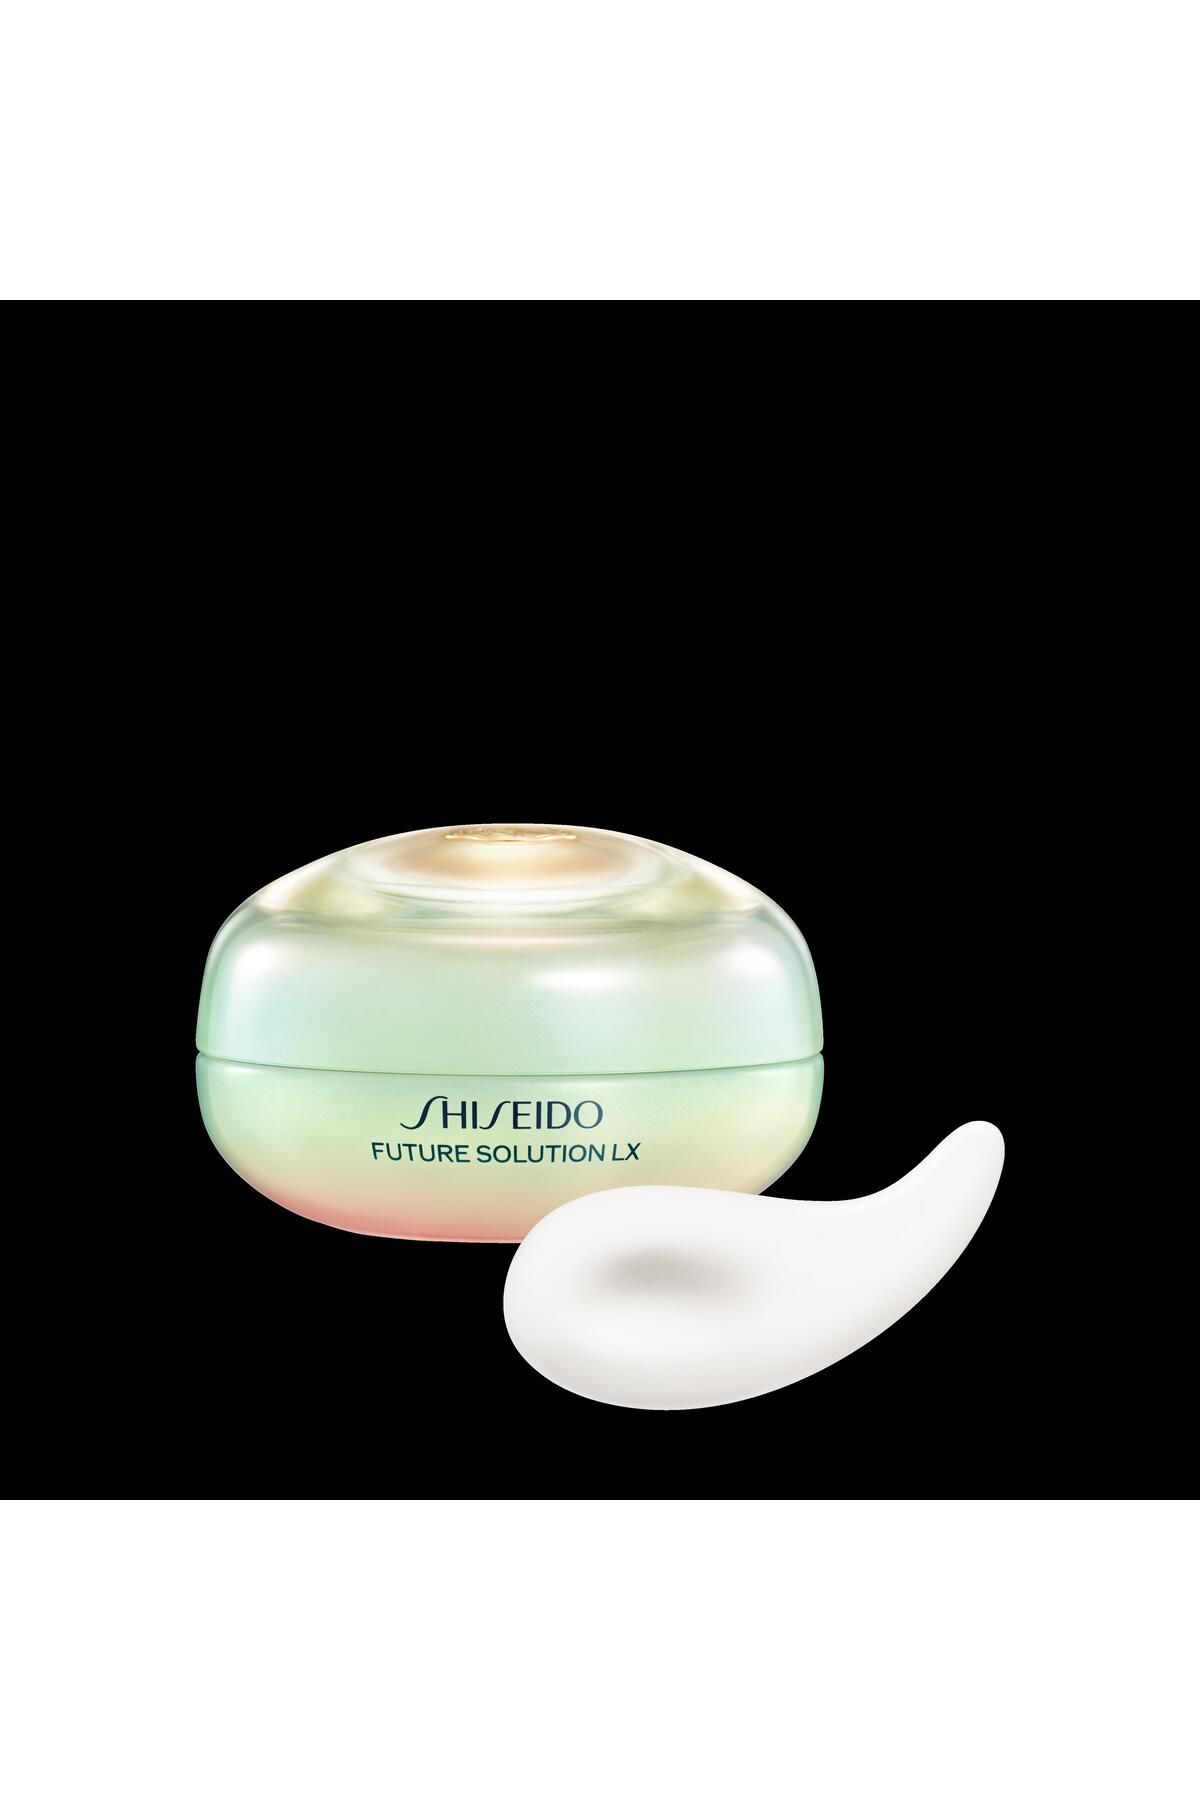 Shiseido YENİ Future Solution LX Legendary Enmei Ultimate Briliance Eye Cream